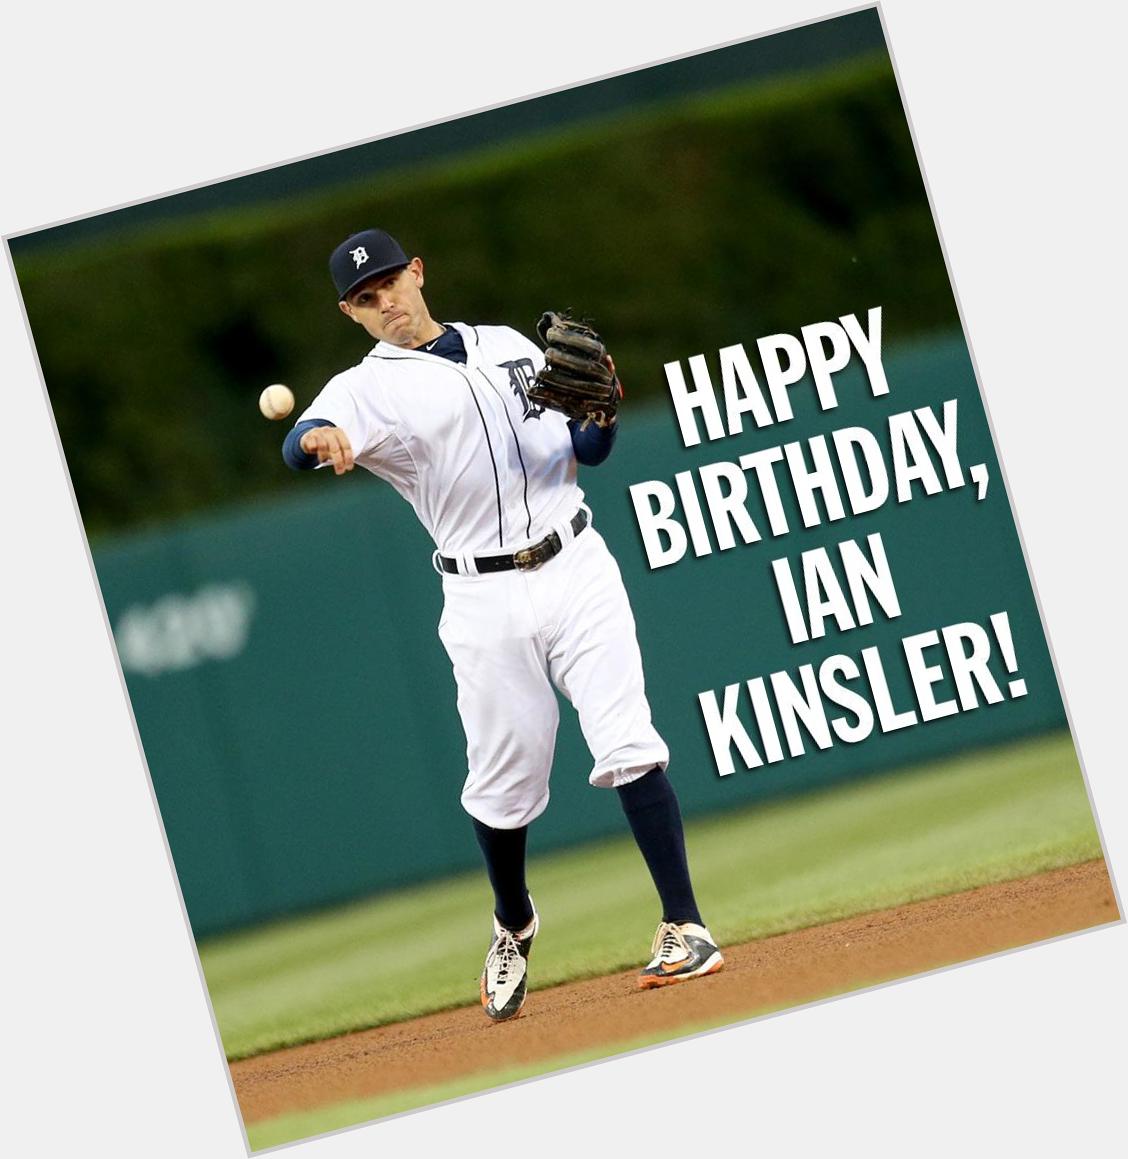 Happy birthday, Ian Kinsler! 